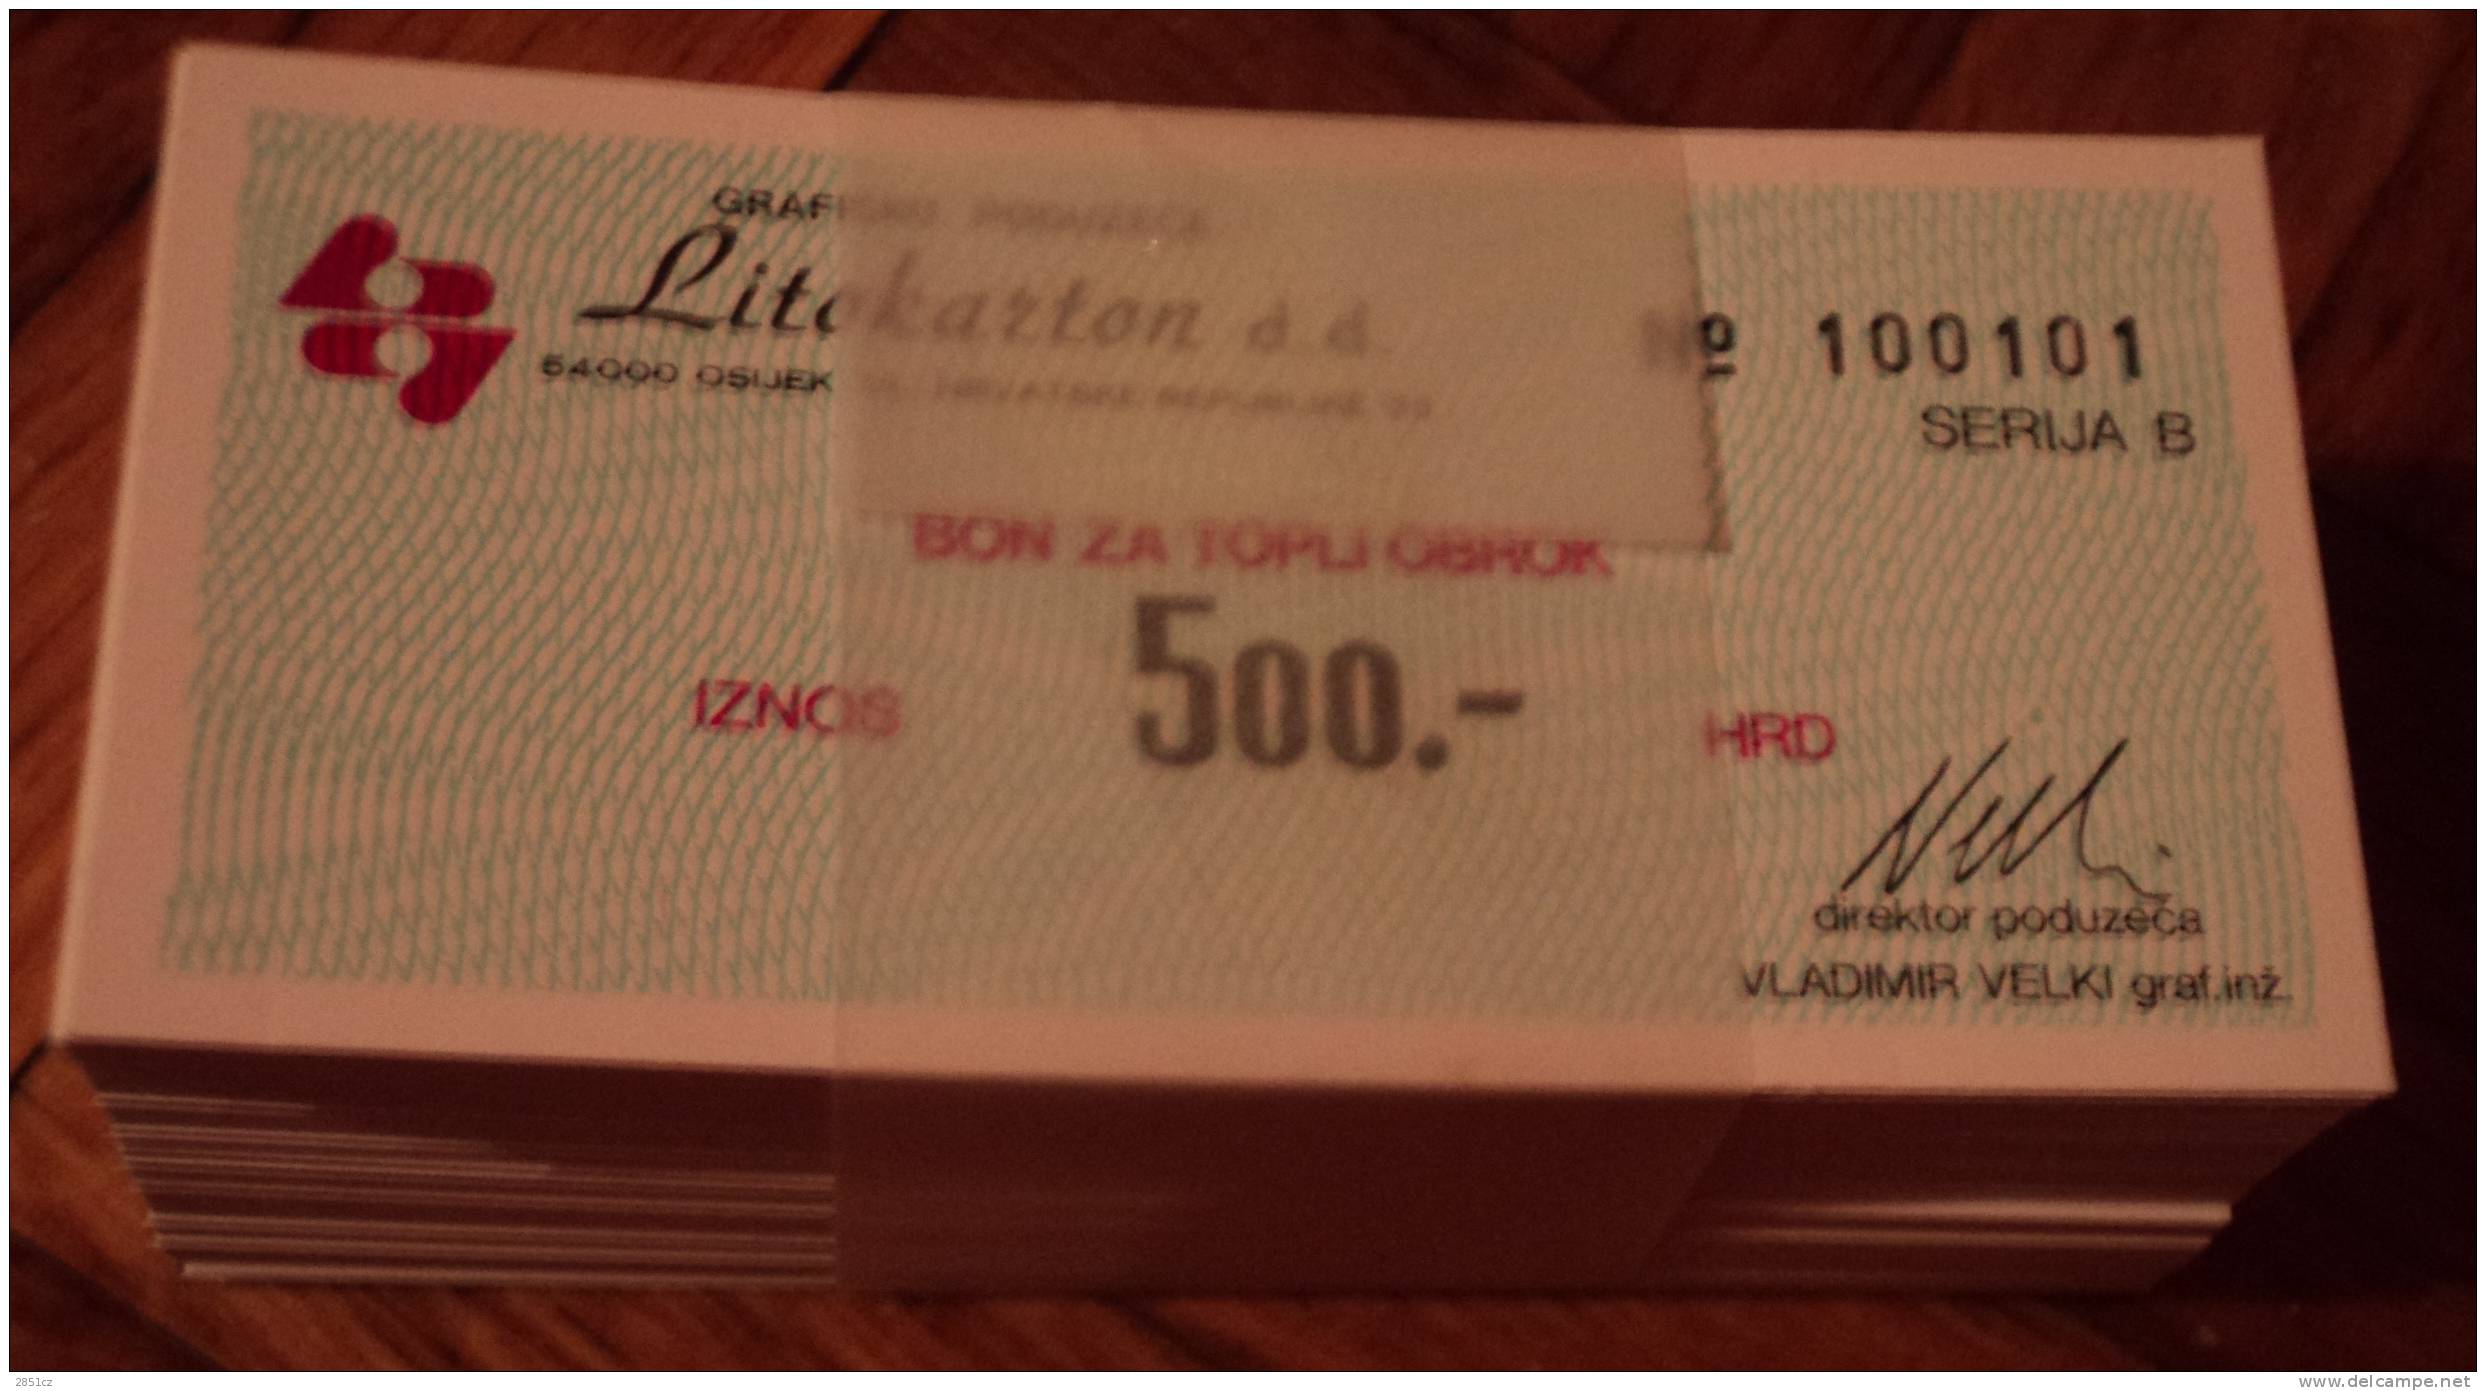 UNC MONEY COUPON FOR HOT MEAL IN COMPANY Litokarton - 500 HRD (bunch Of 100 Coupons) , Osijek, Croatia - Croatia